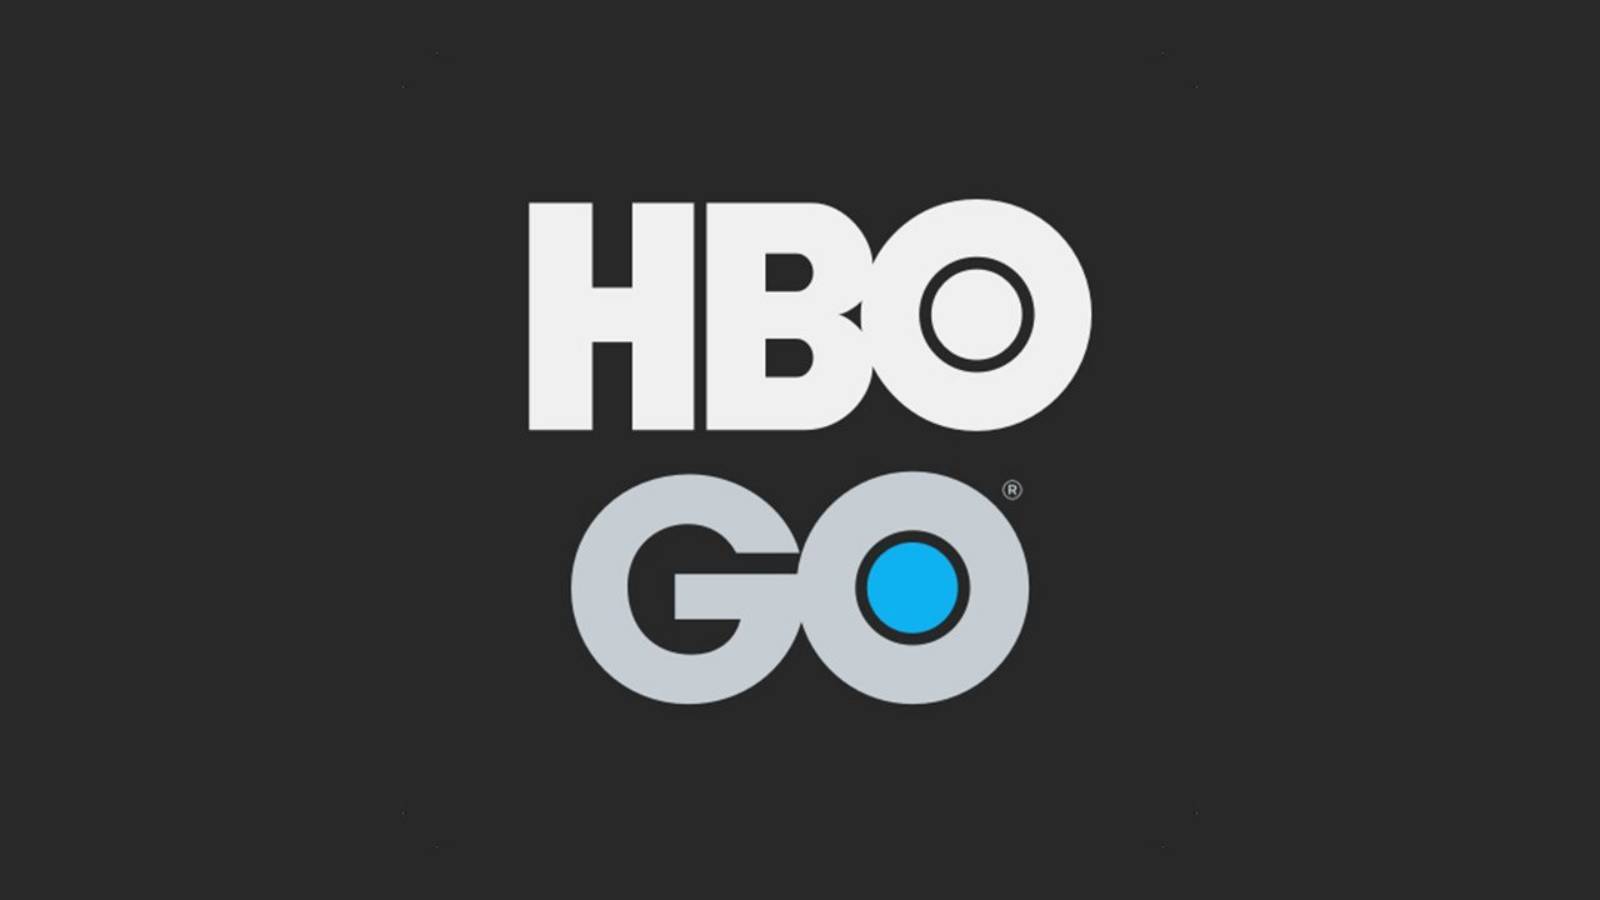 HBO Go julkaistaan